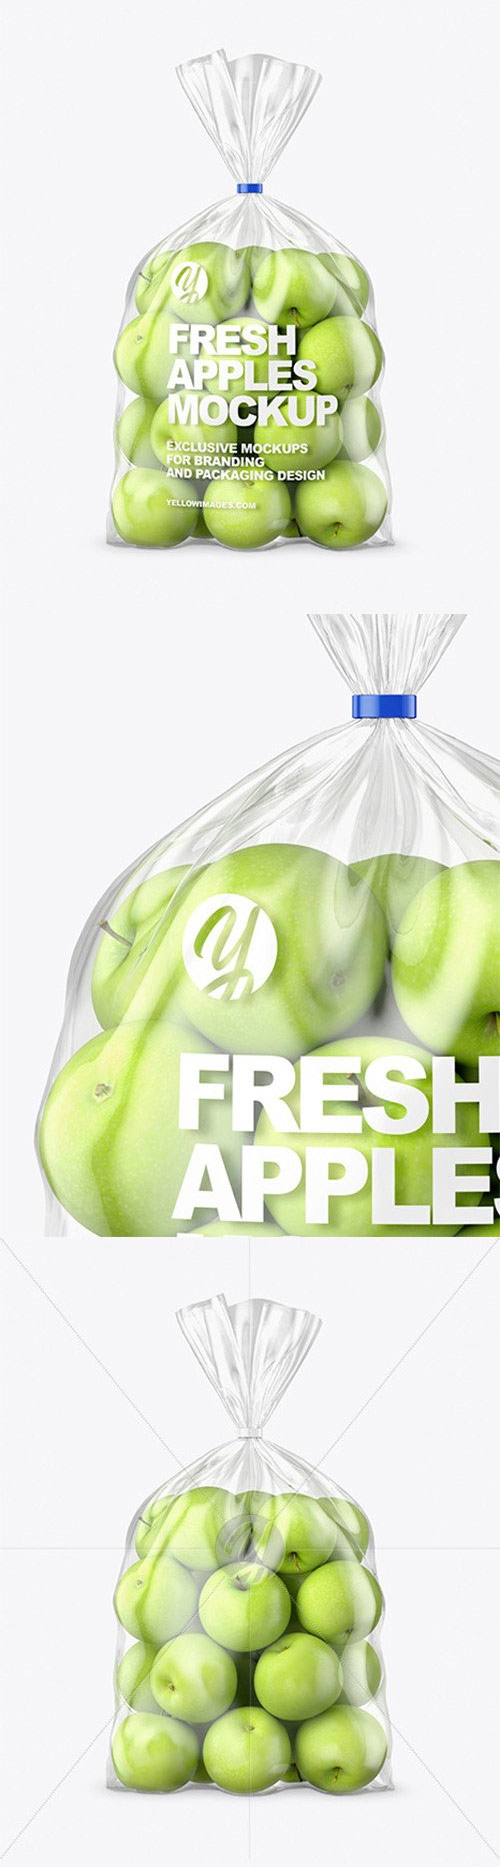 Plastic Bag with Green Apples Mockup 66987